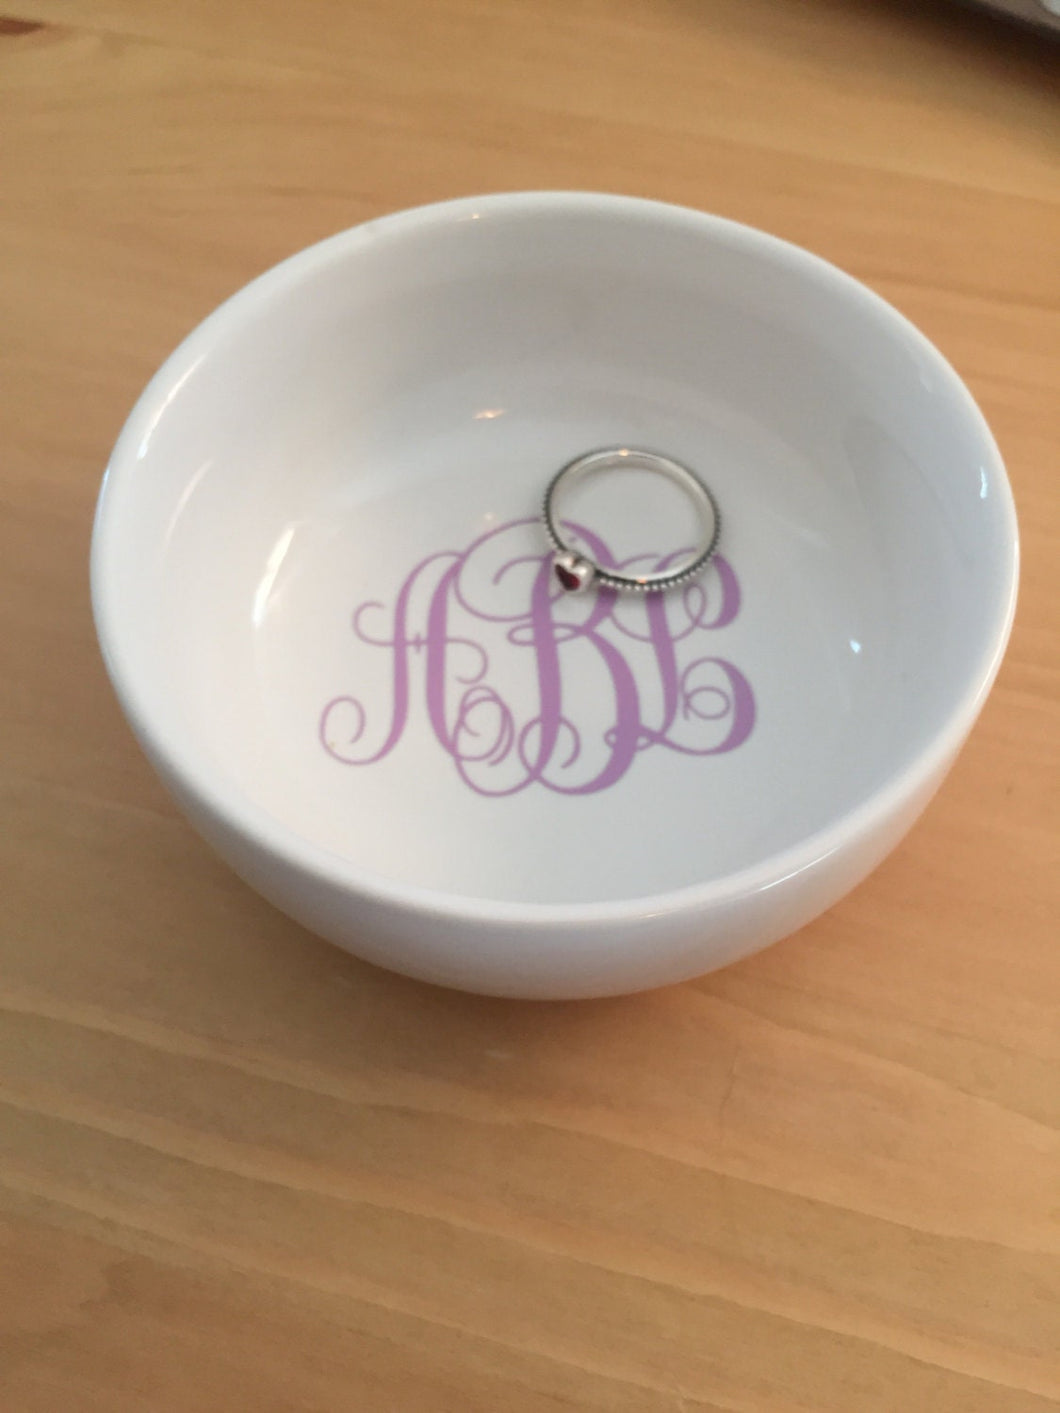 Jewelry dish, personalized ring dish, monogrammed jewelry dish, monogram ring dish, monogram ring dish, monogrammed jewelry holder